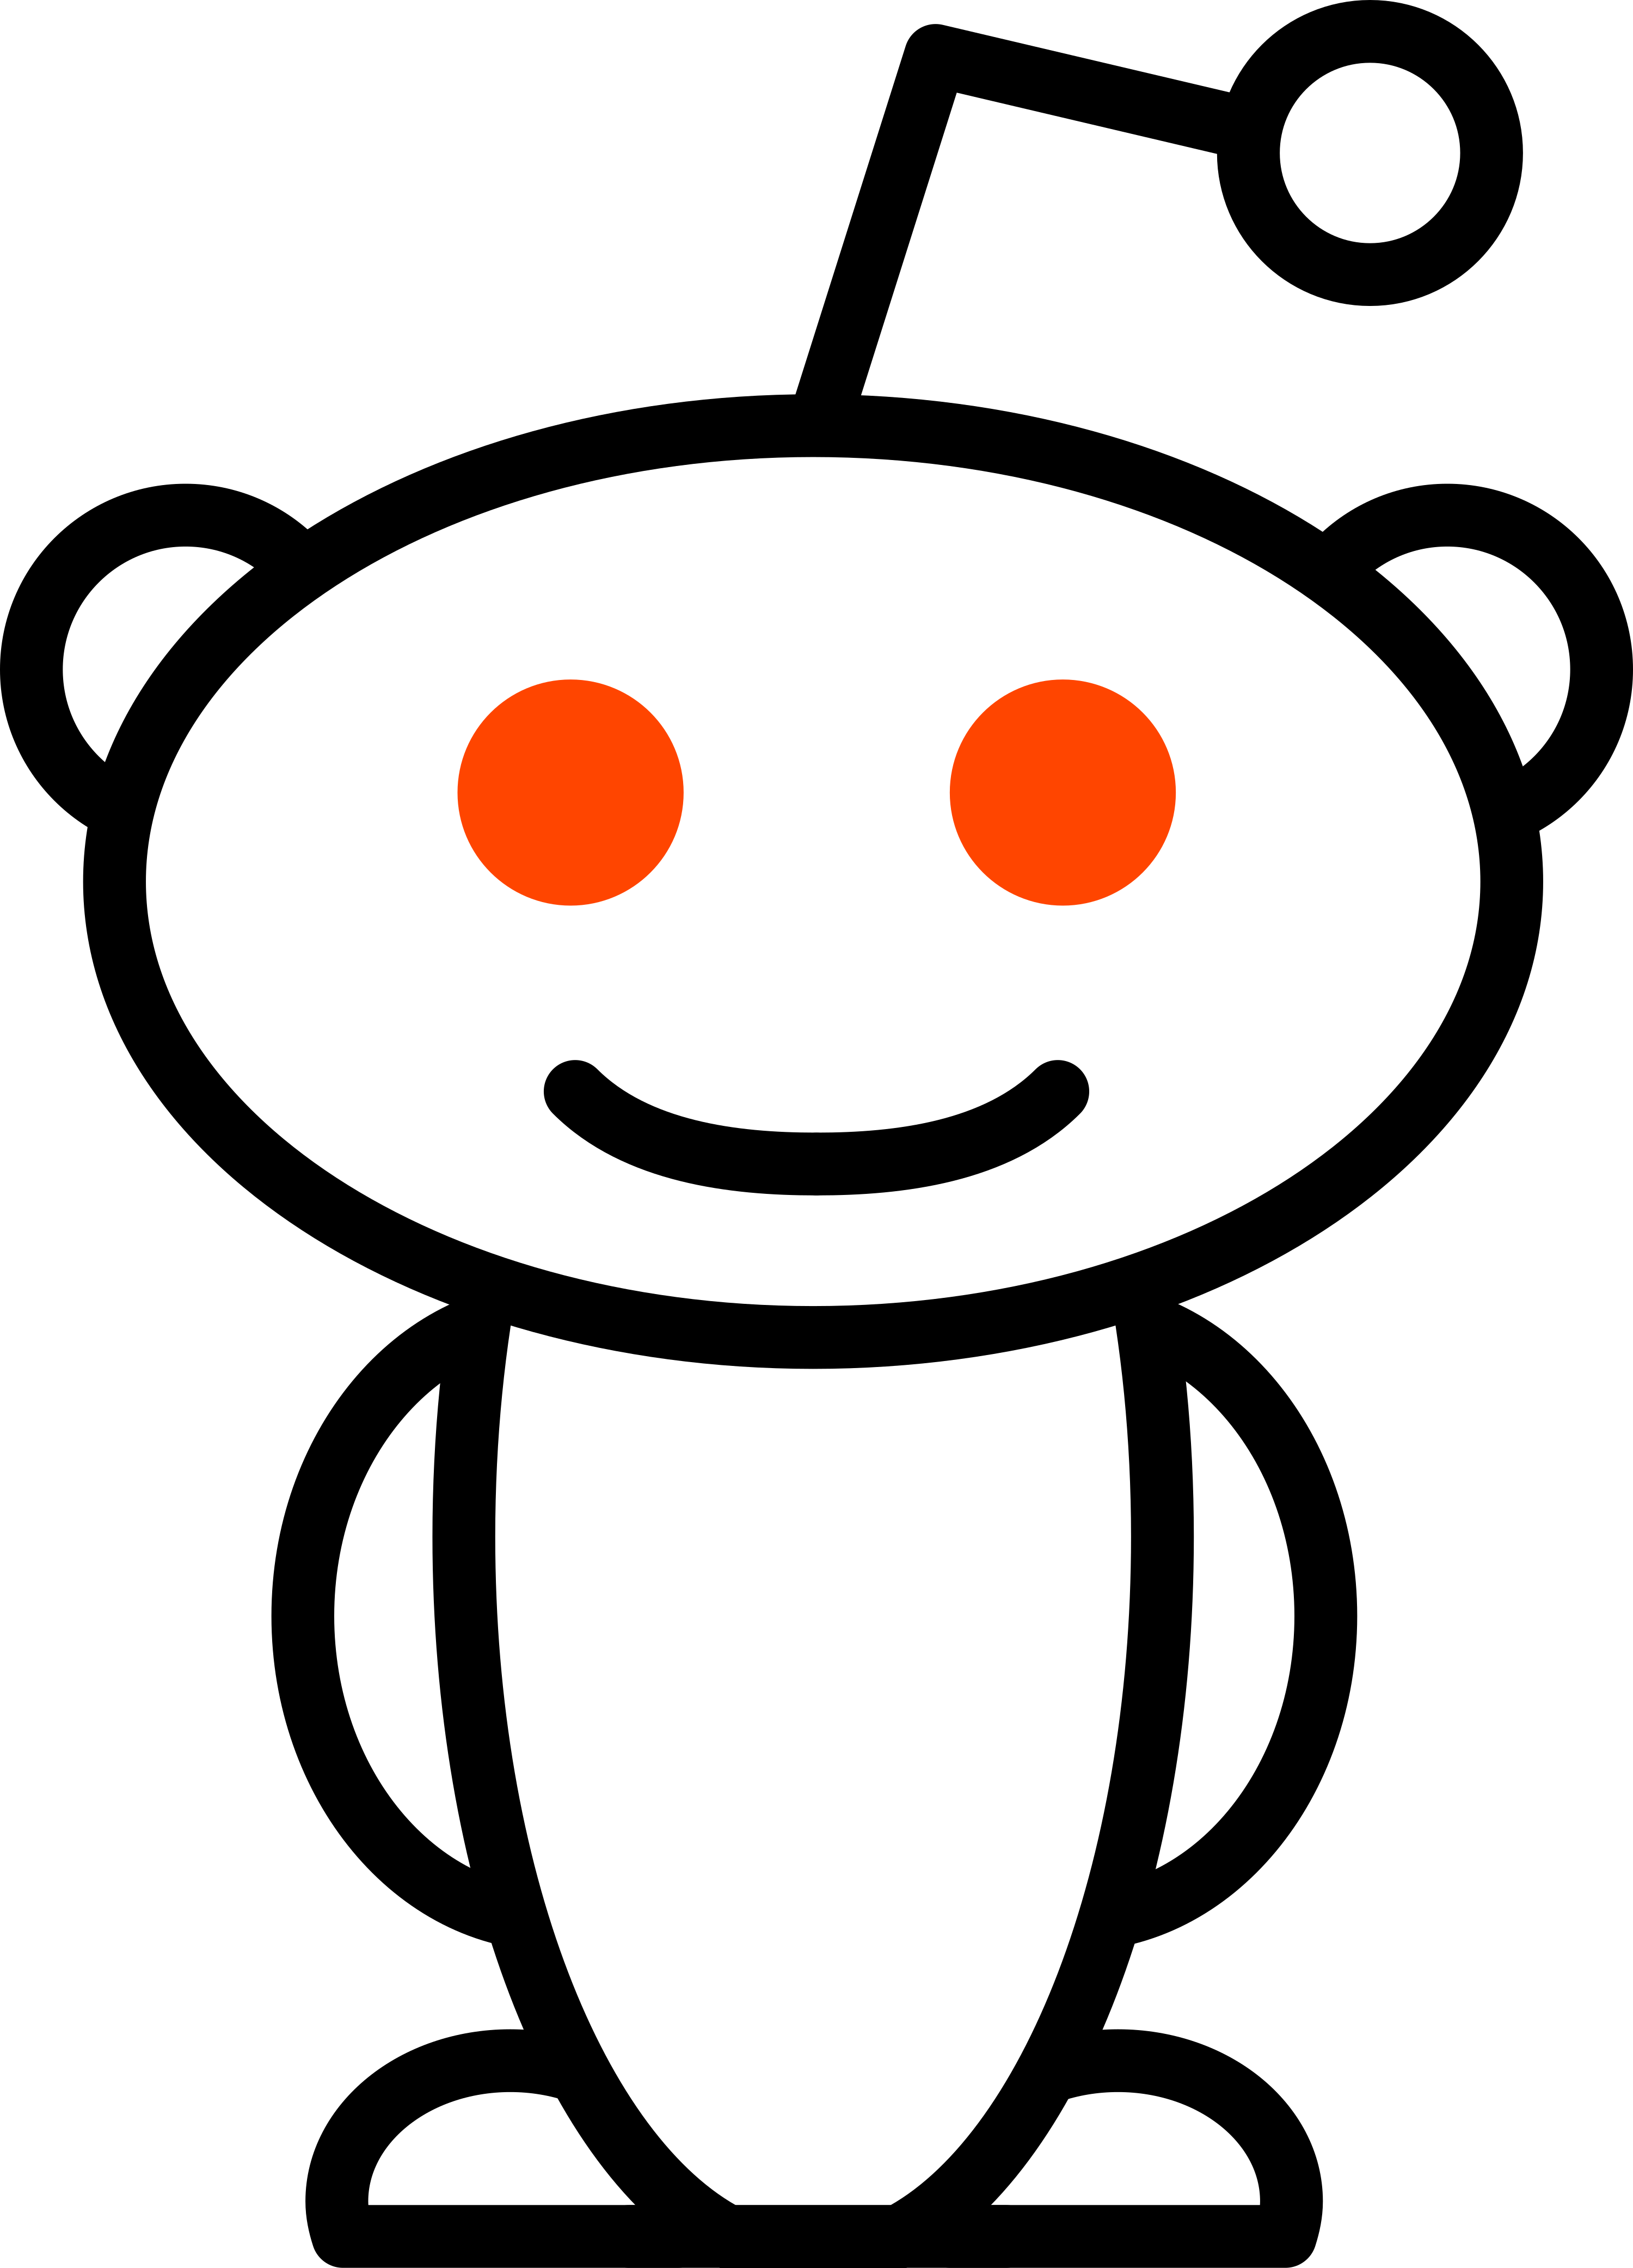 reddit logo 17 - Reddit Logo